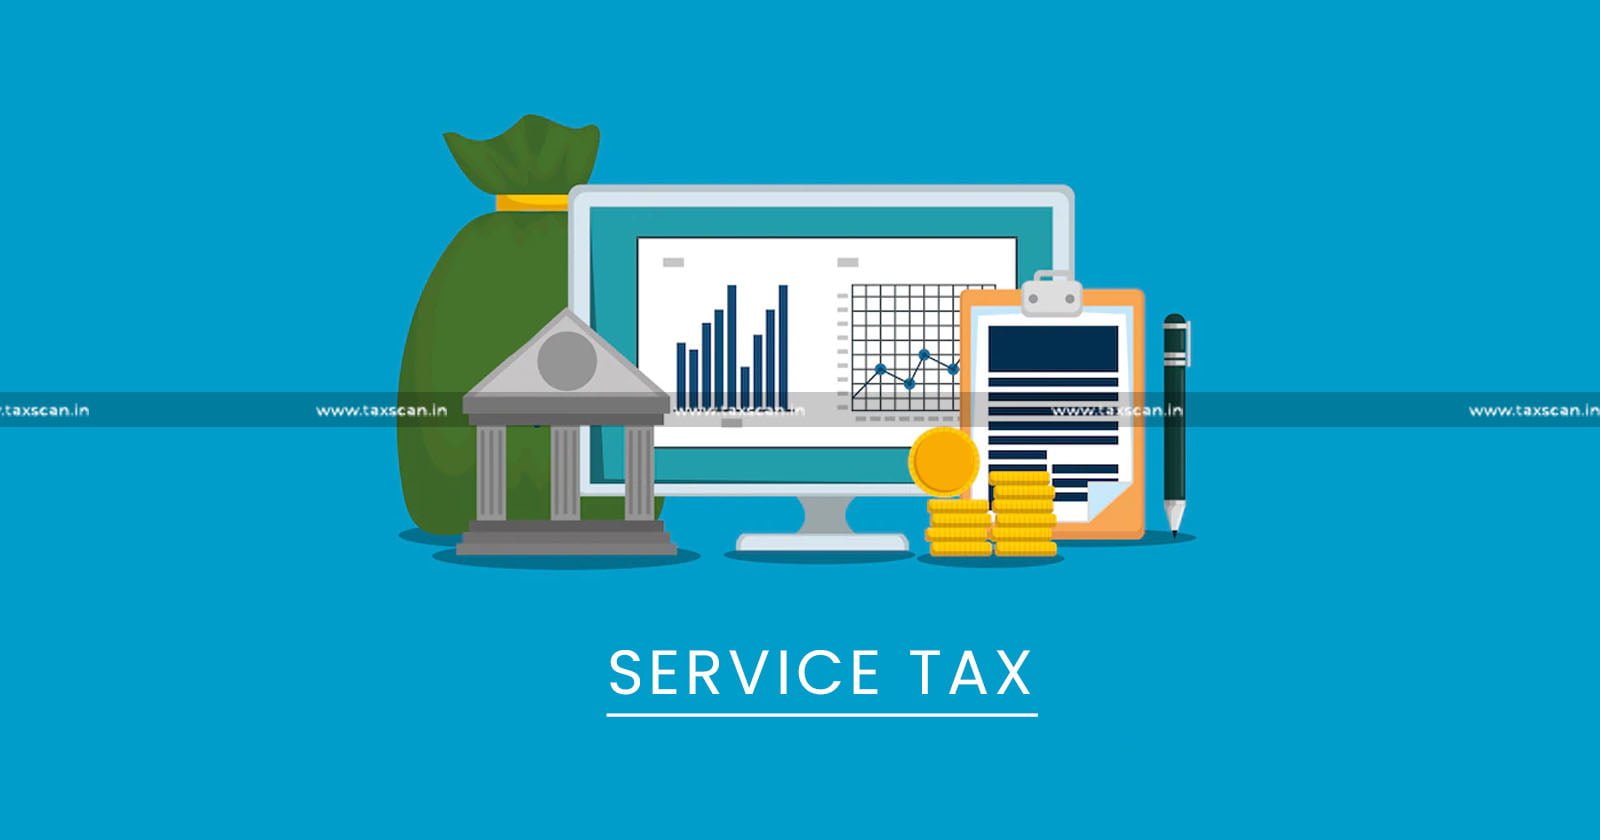 CESTAT - CESTAT Ahmedabad - Service Tax - Service Tax Subcontractor Ruling - TAXSCAN